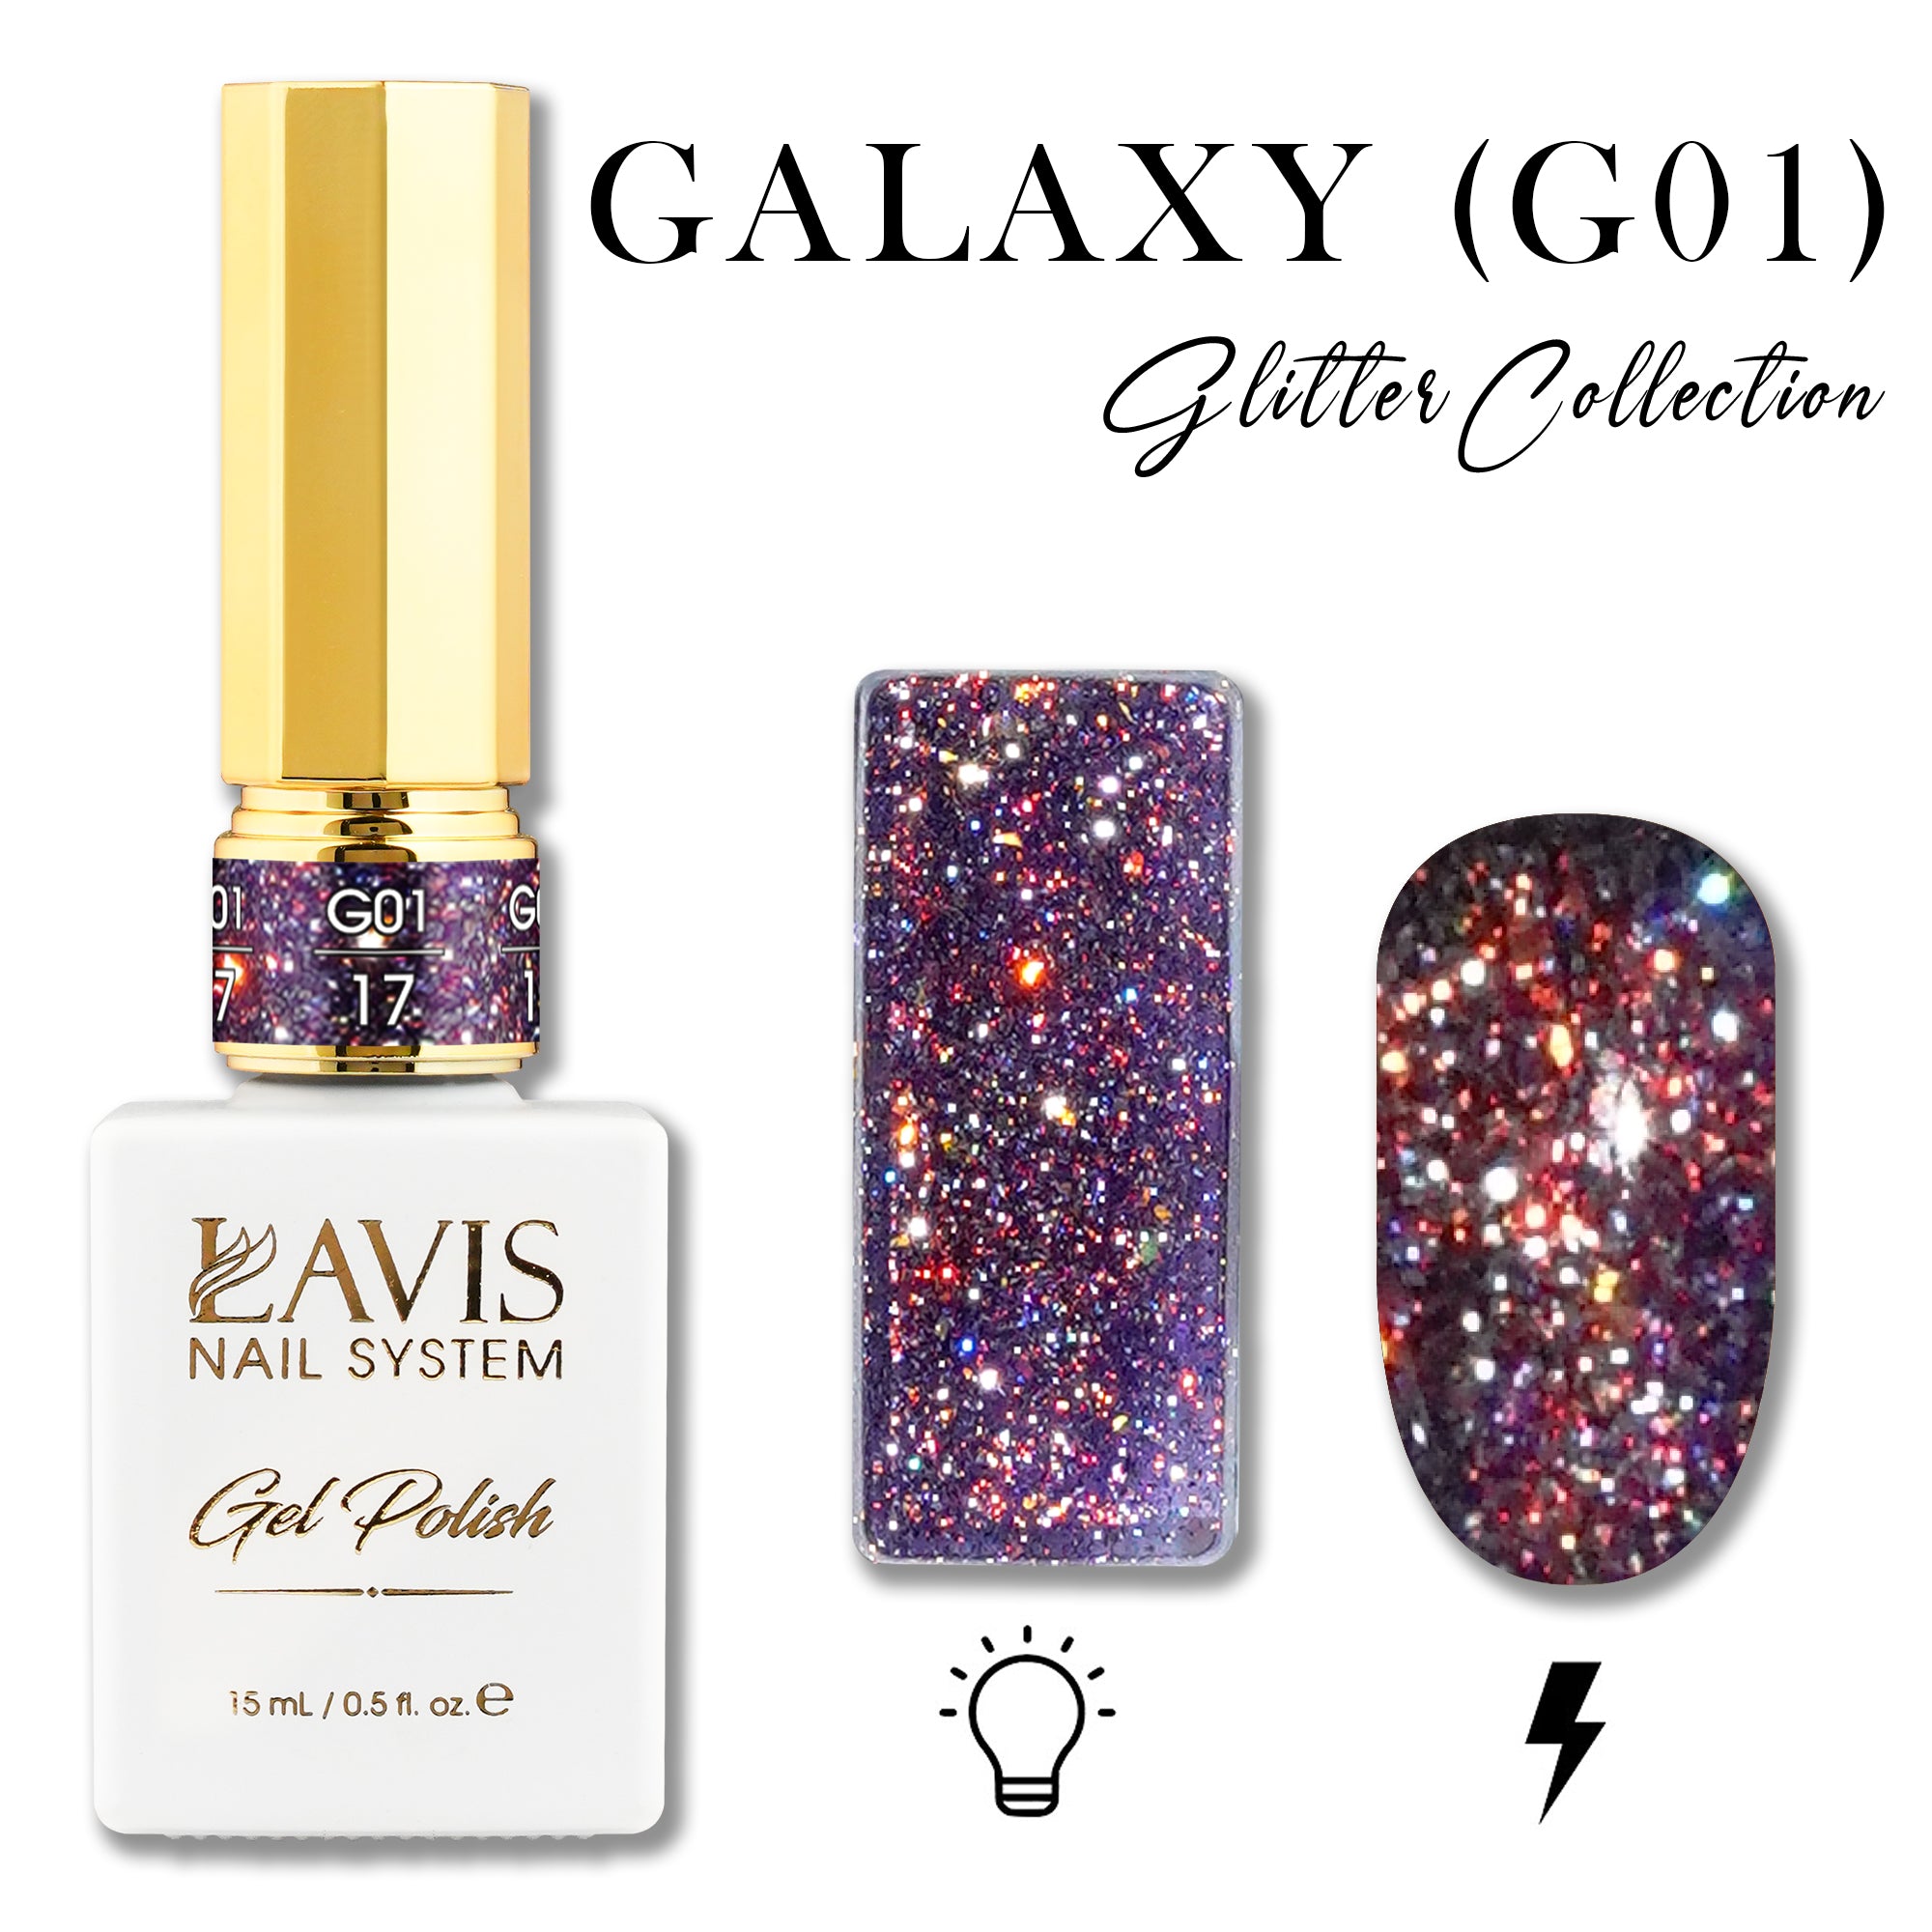 LAVIS Glitter G01 - 17 - Gel Polish 0.5 oz - Galaxy Collection